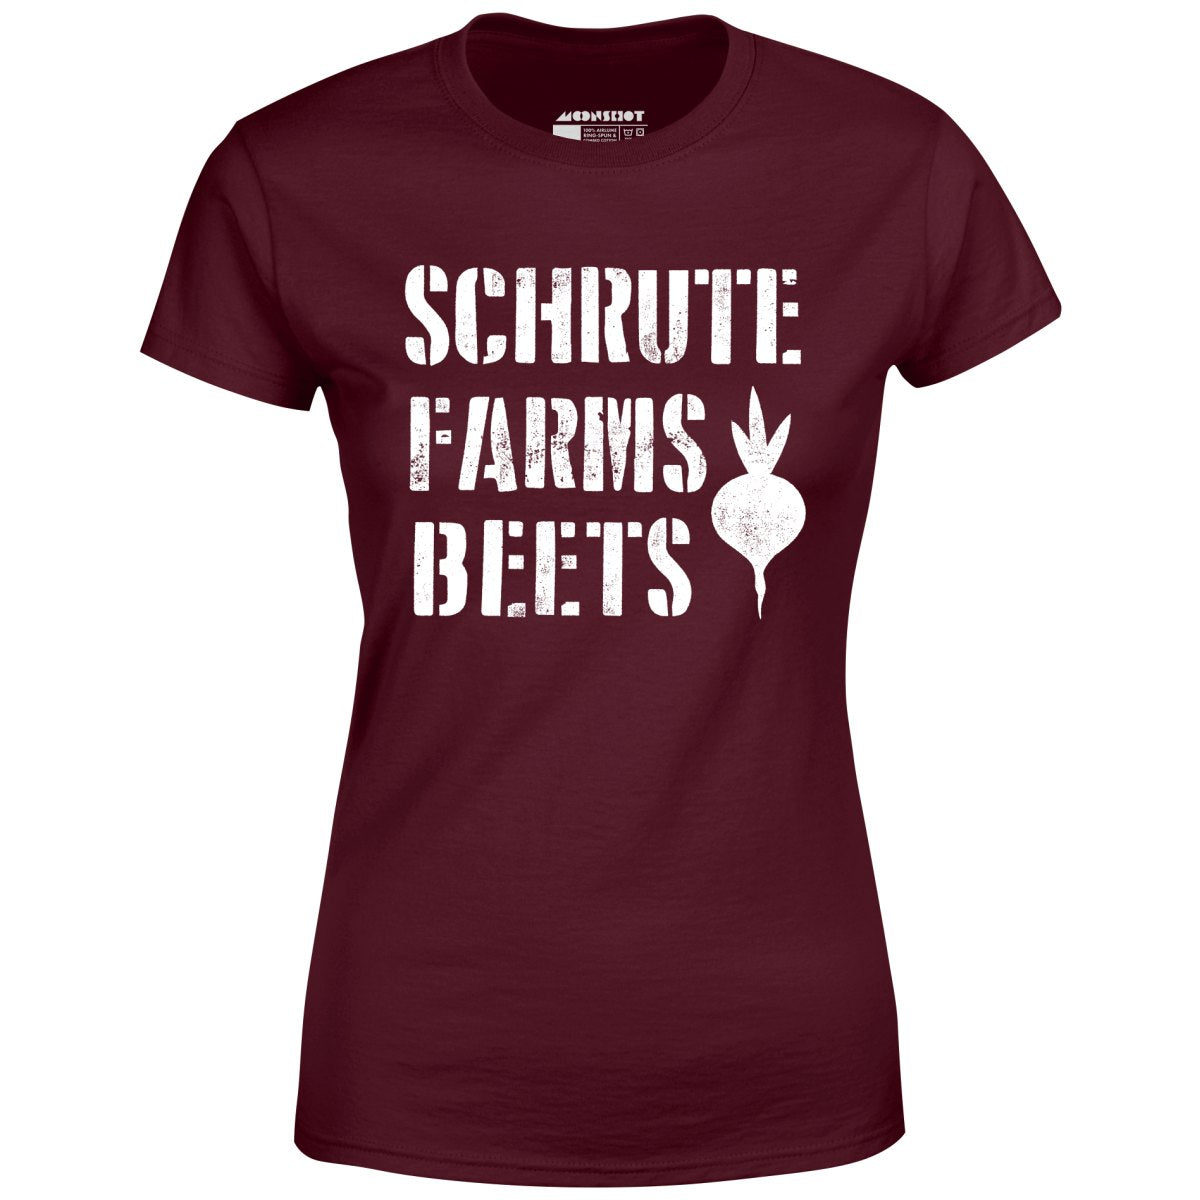 Schrute Farms Beets - Women's T-Shirt